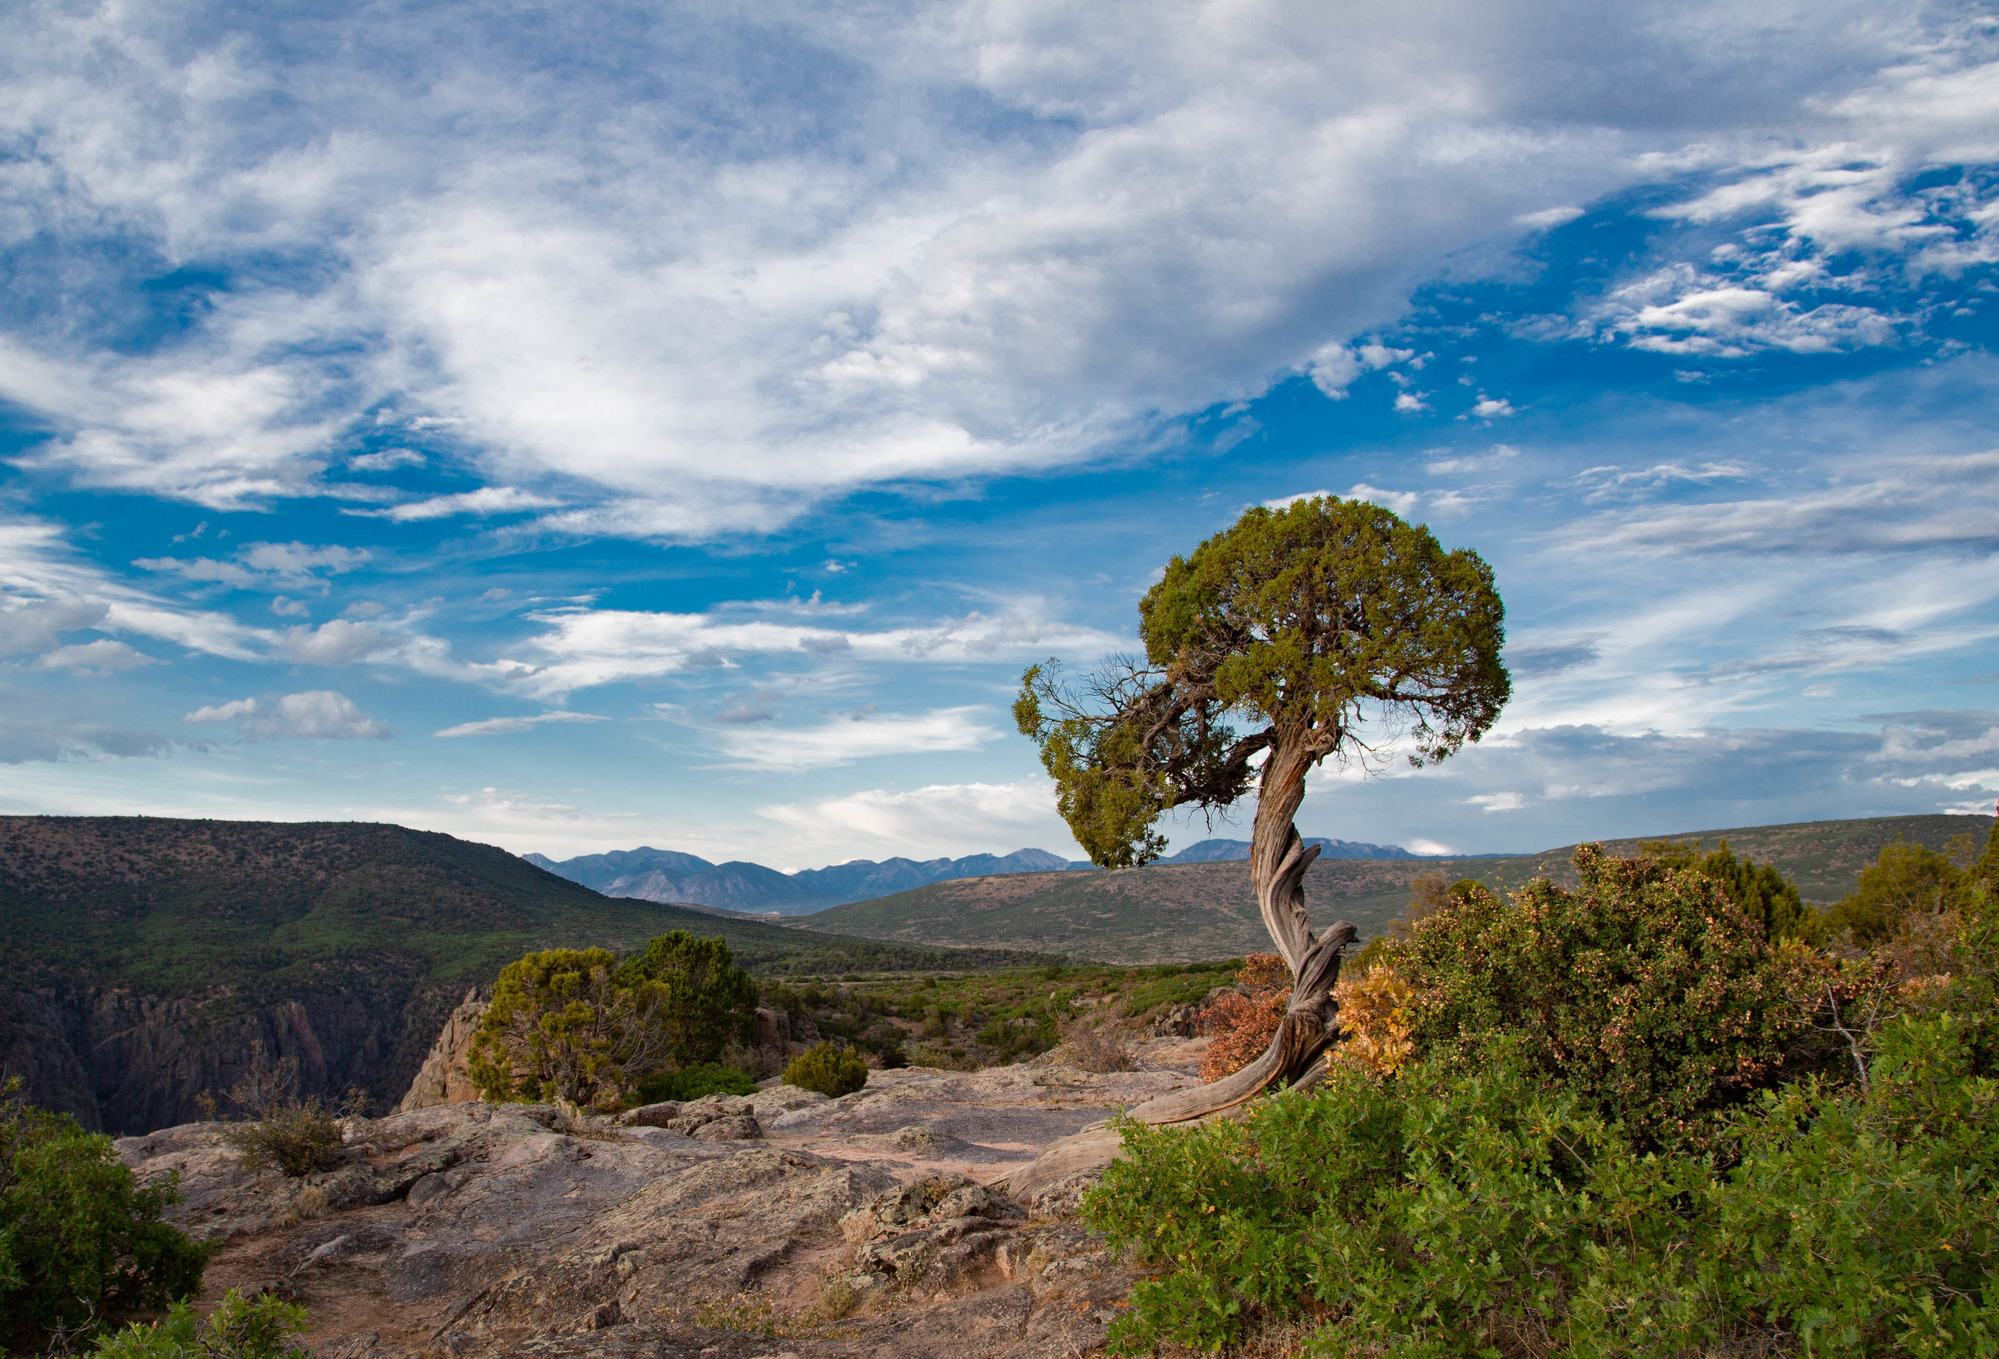 Juniper tree on a rocky surface